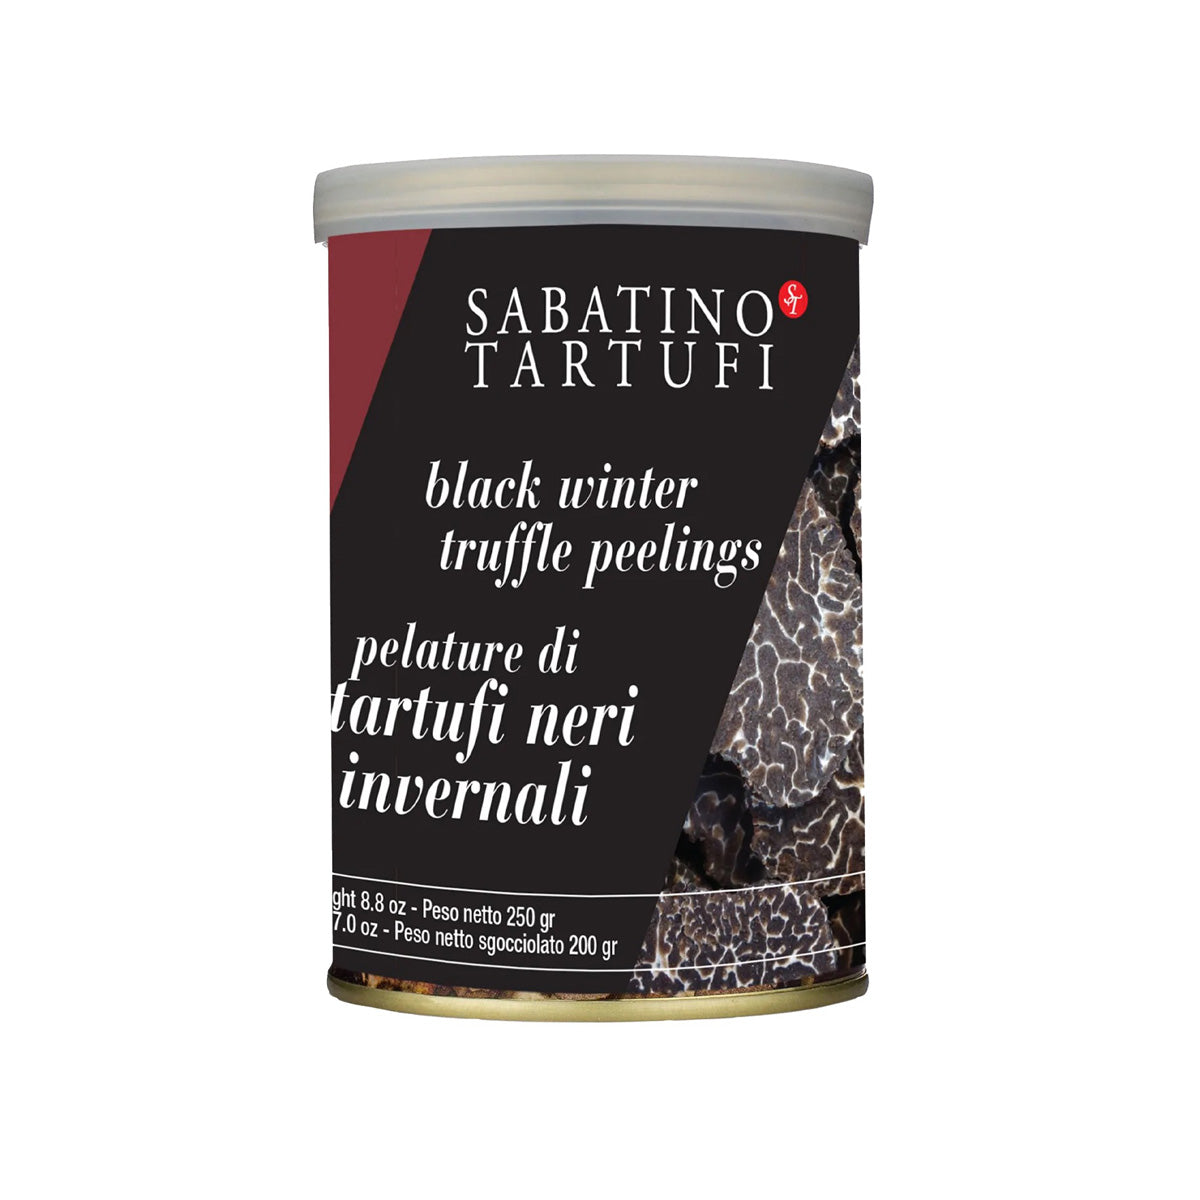 Sabatino Tartufi Black Winter Truffle Peelings